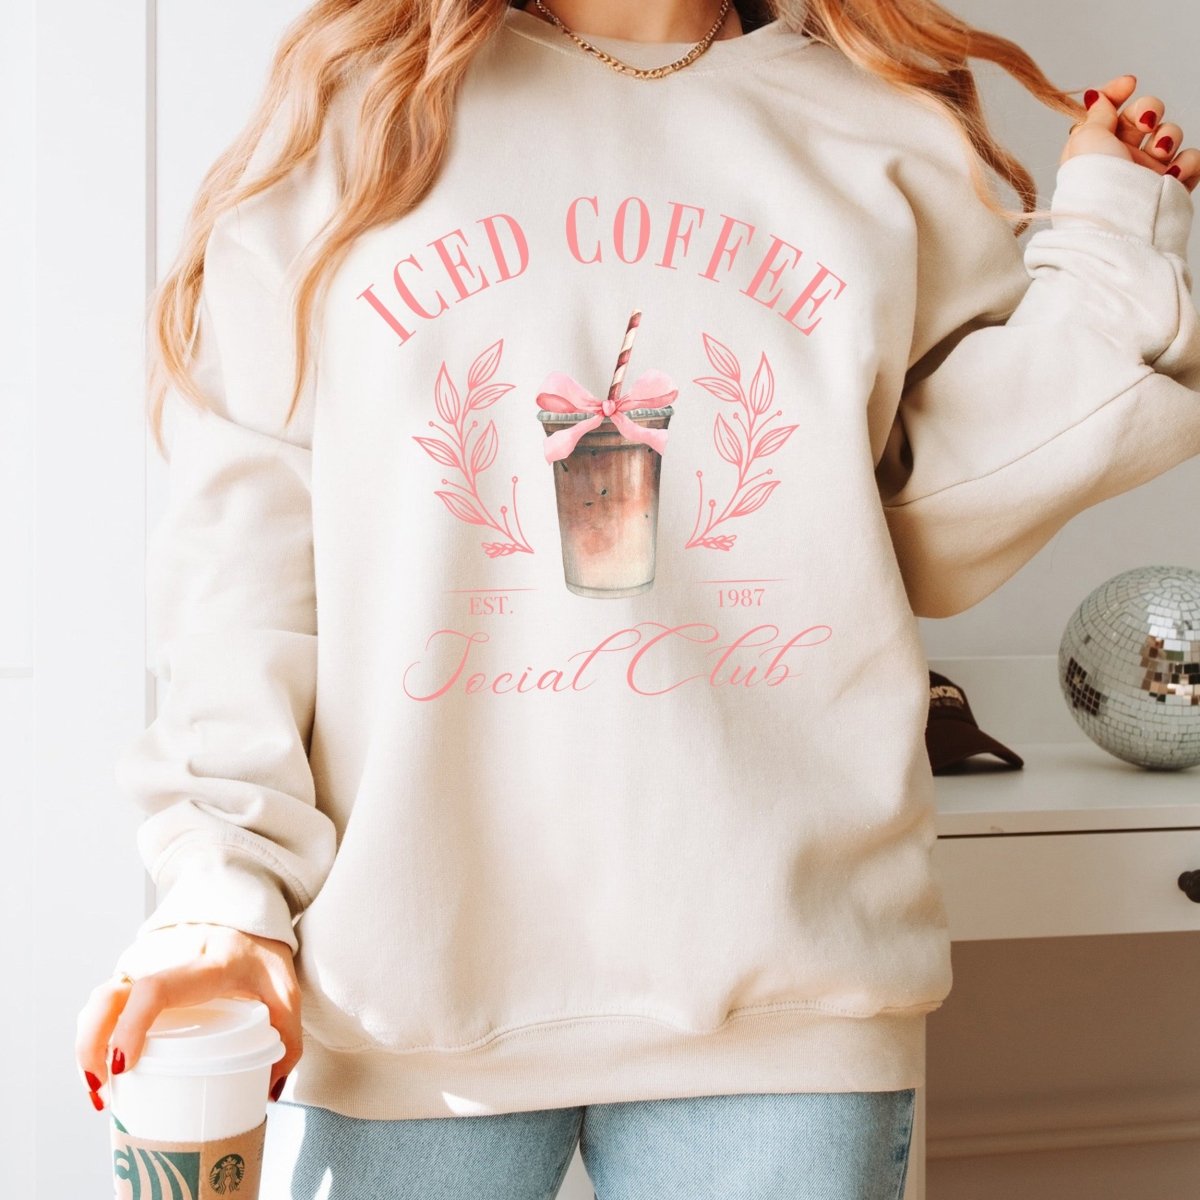 Iced Coffee Social Club Crew Sweatshirt - Limeberry Designs